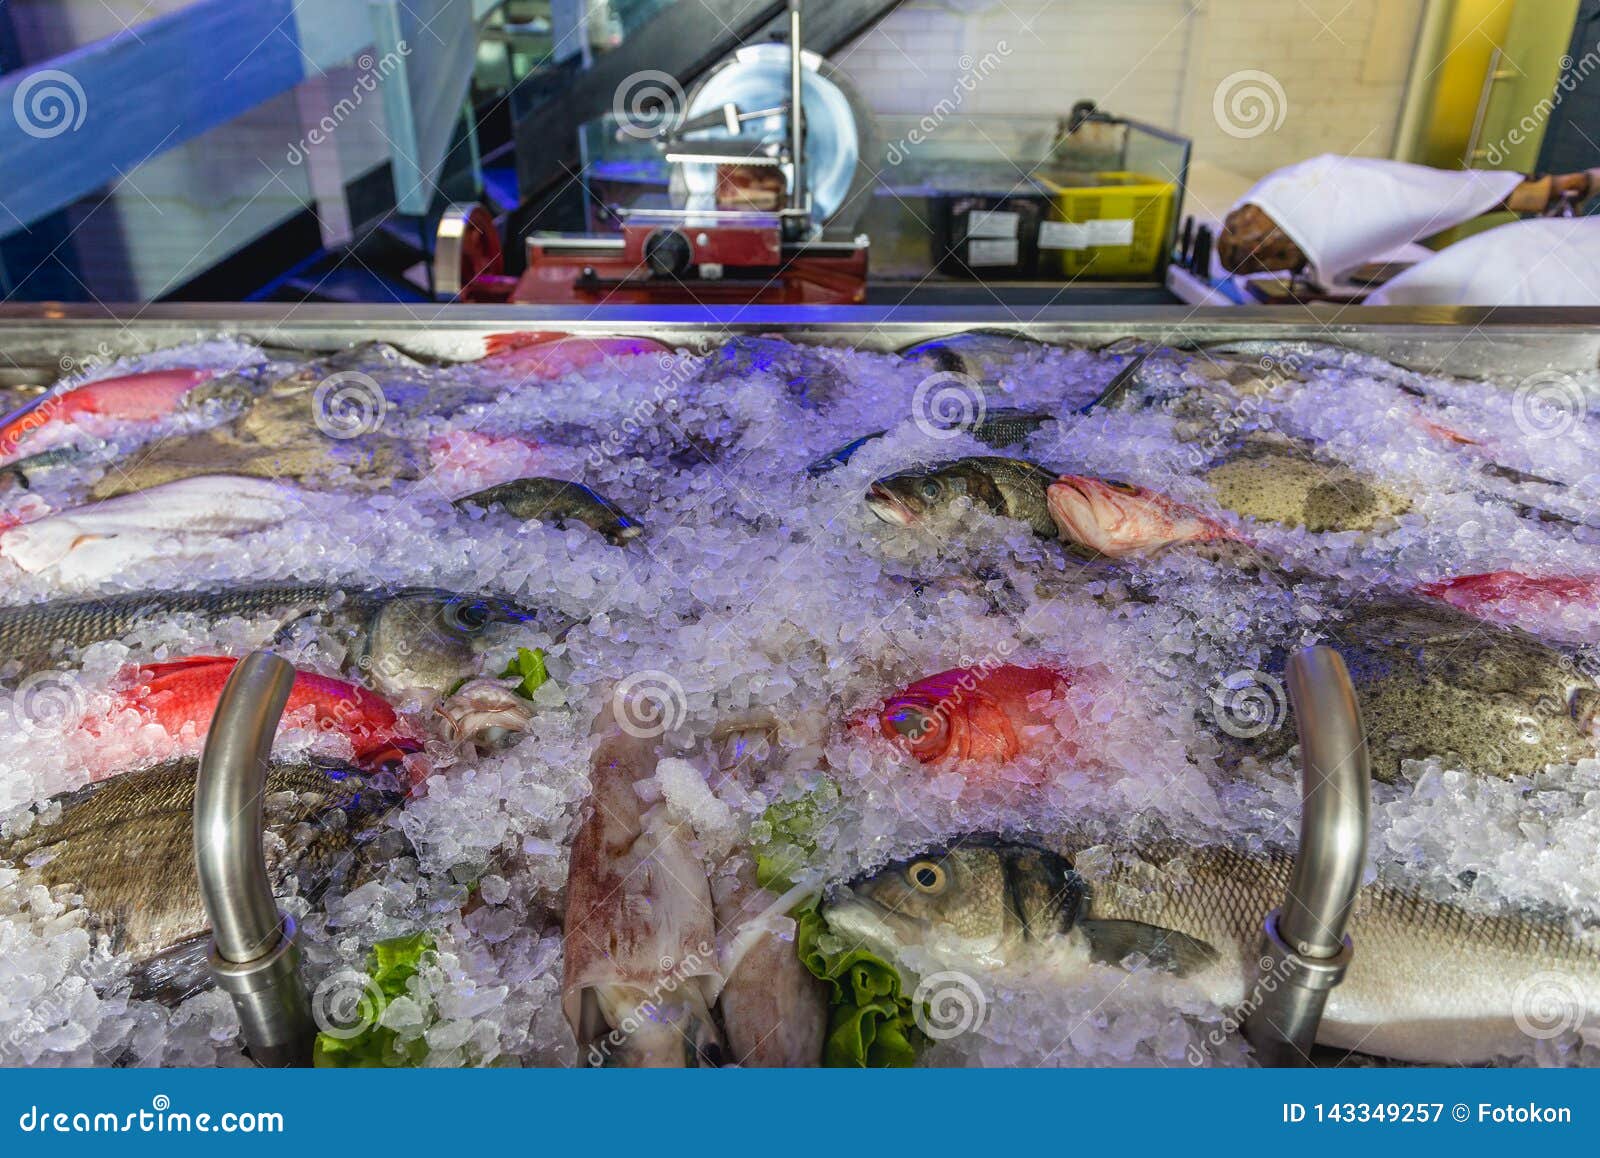 seafood restaurant in lisbon